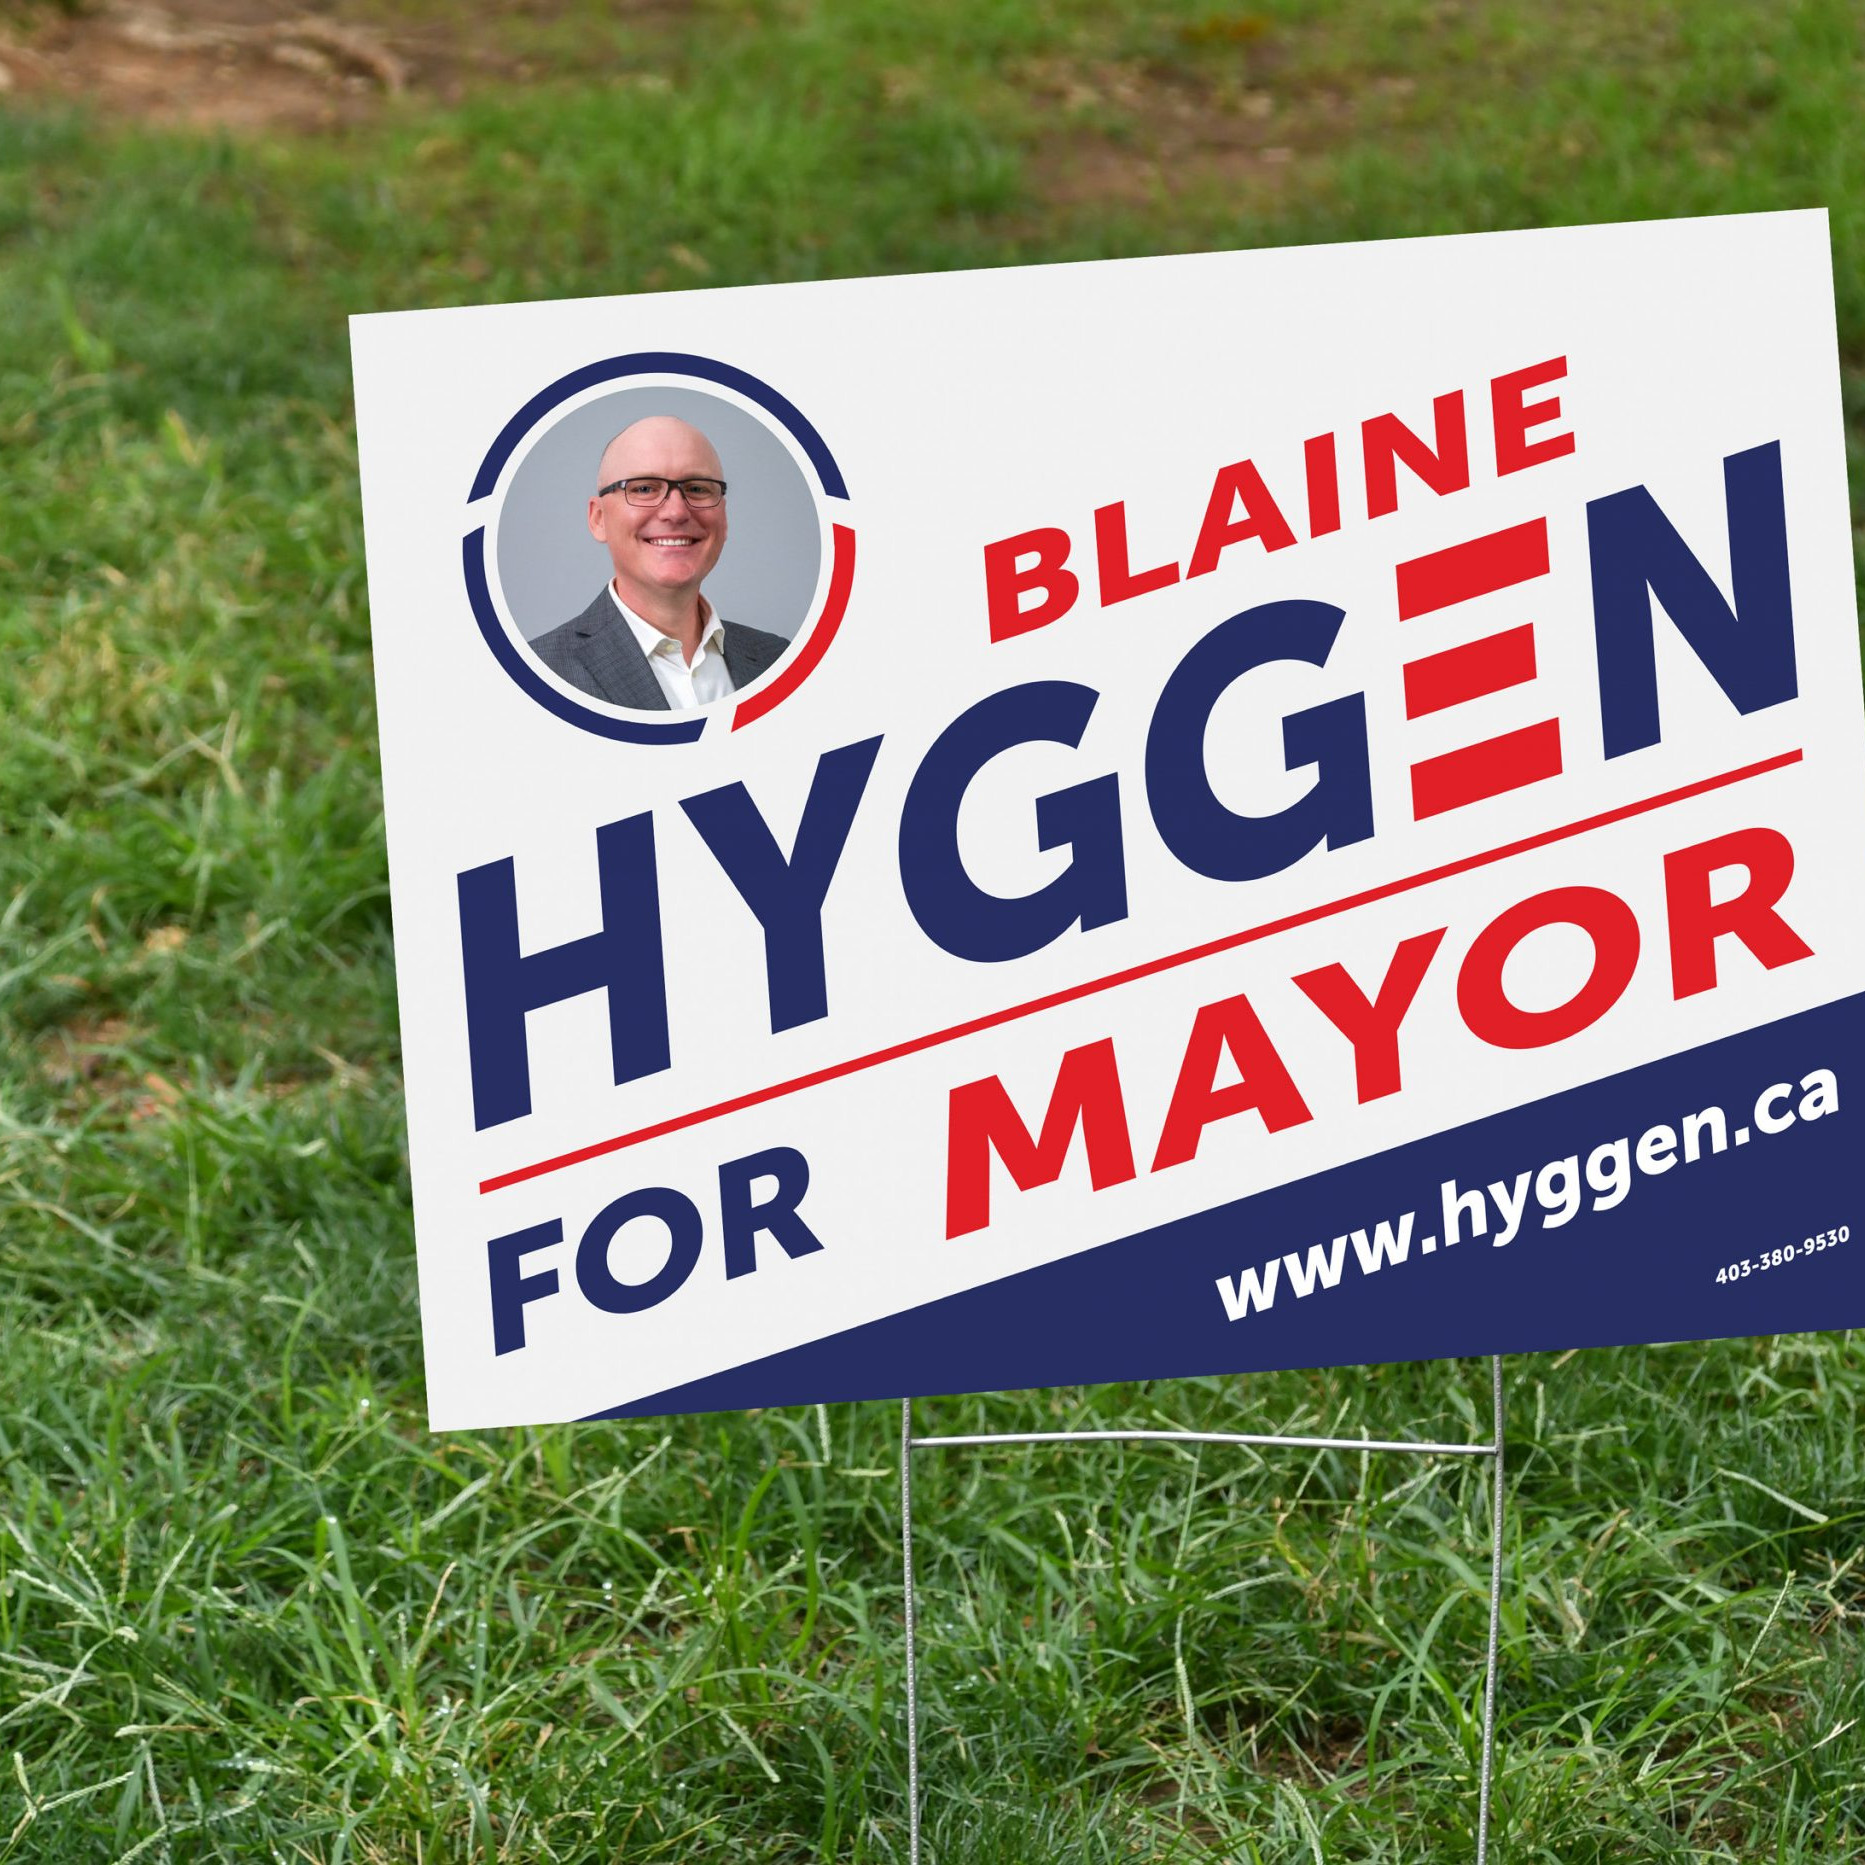 blaine hyggen for mayor yard sign on grass